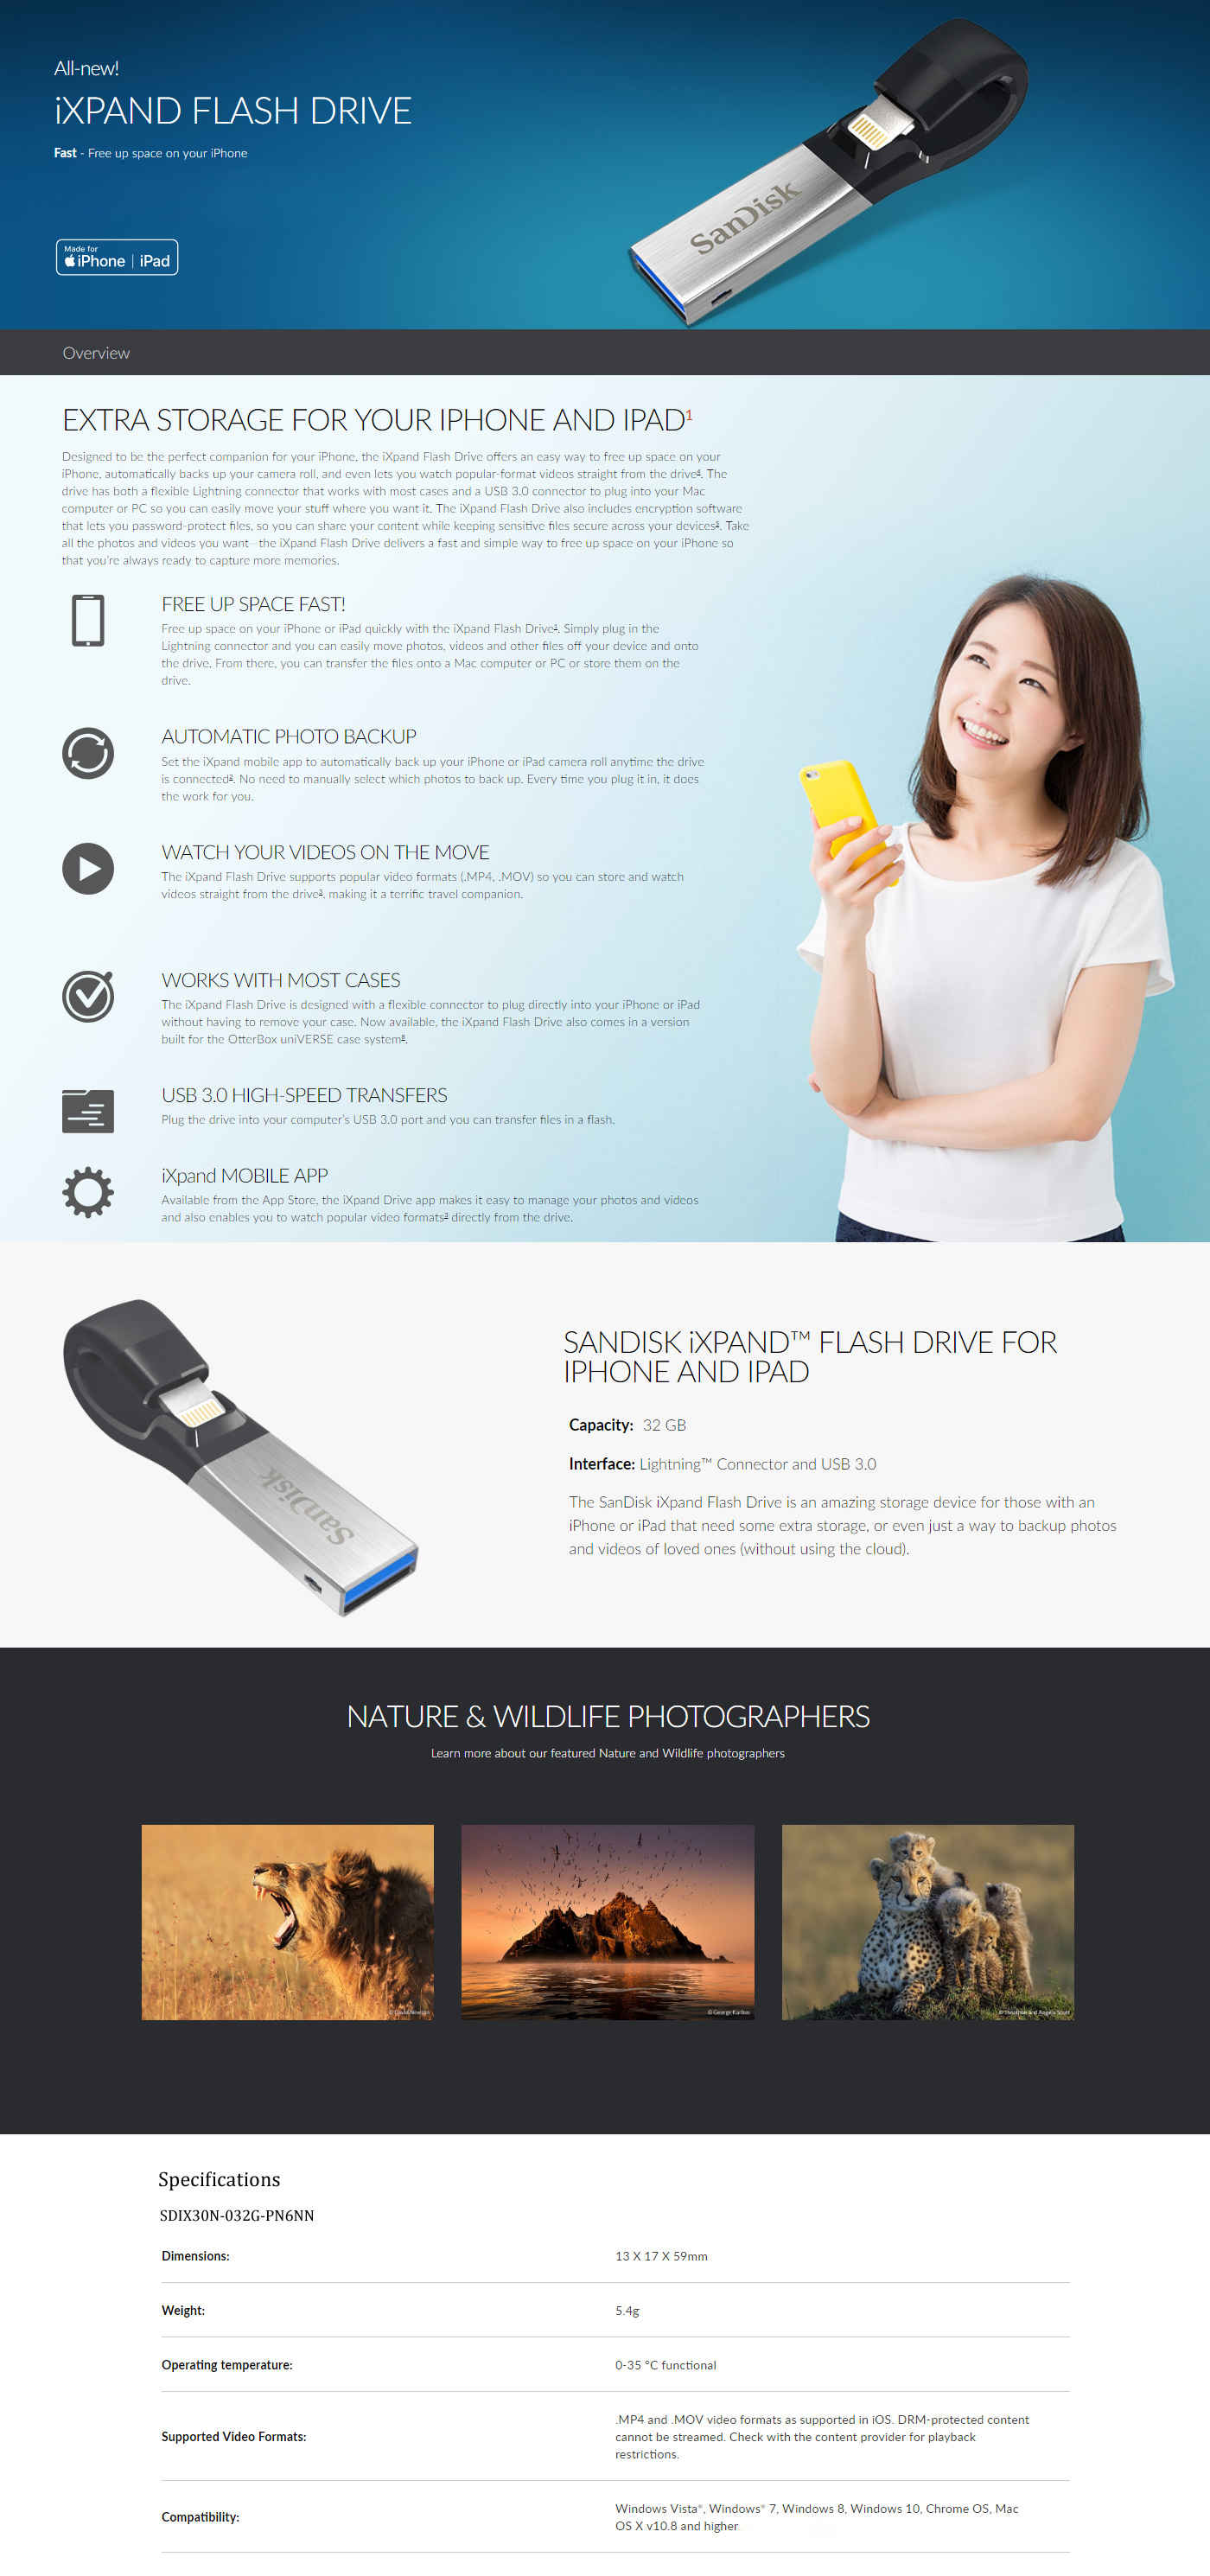 Buy Online SanDisk iXpand 32GB Flash Drive (SDIX30N-032G-PN6NN)